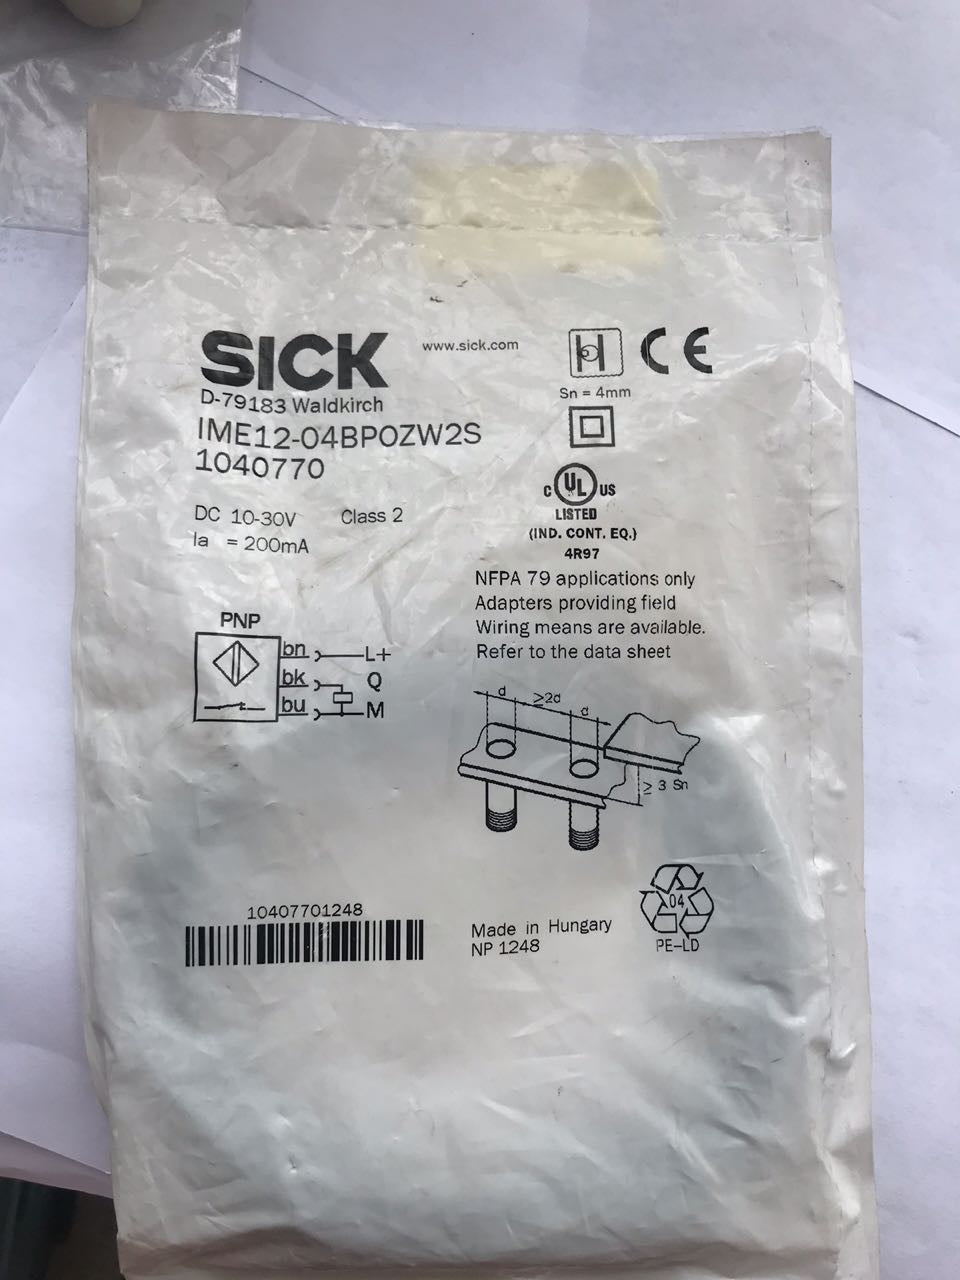 Sensor Sick IME12-04BPOZW2S